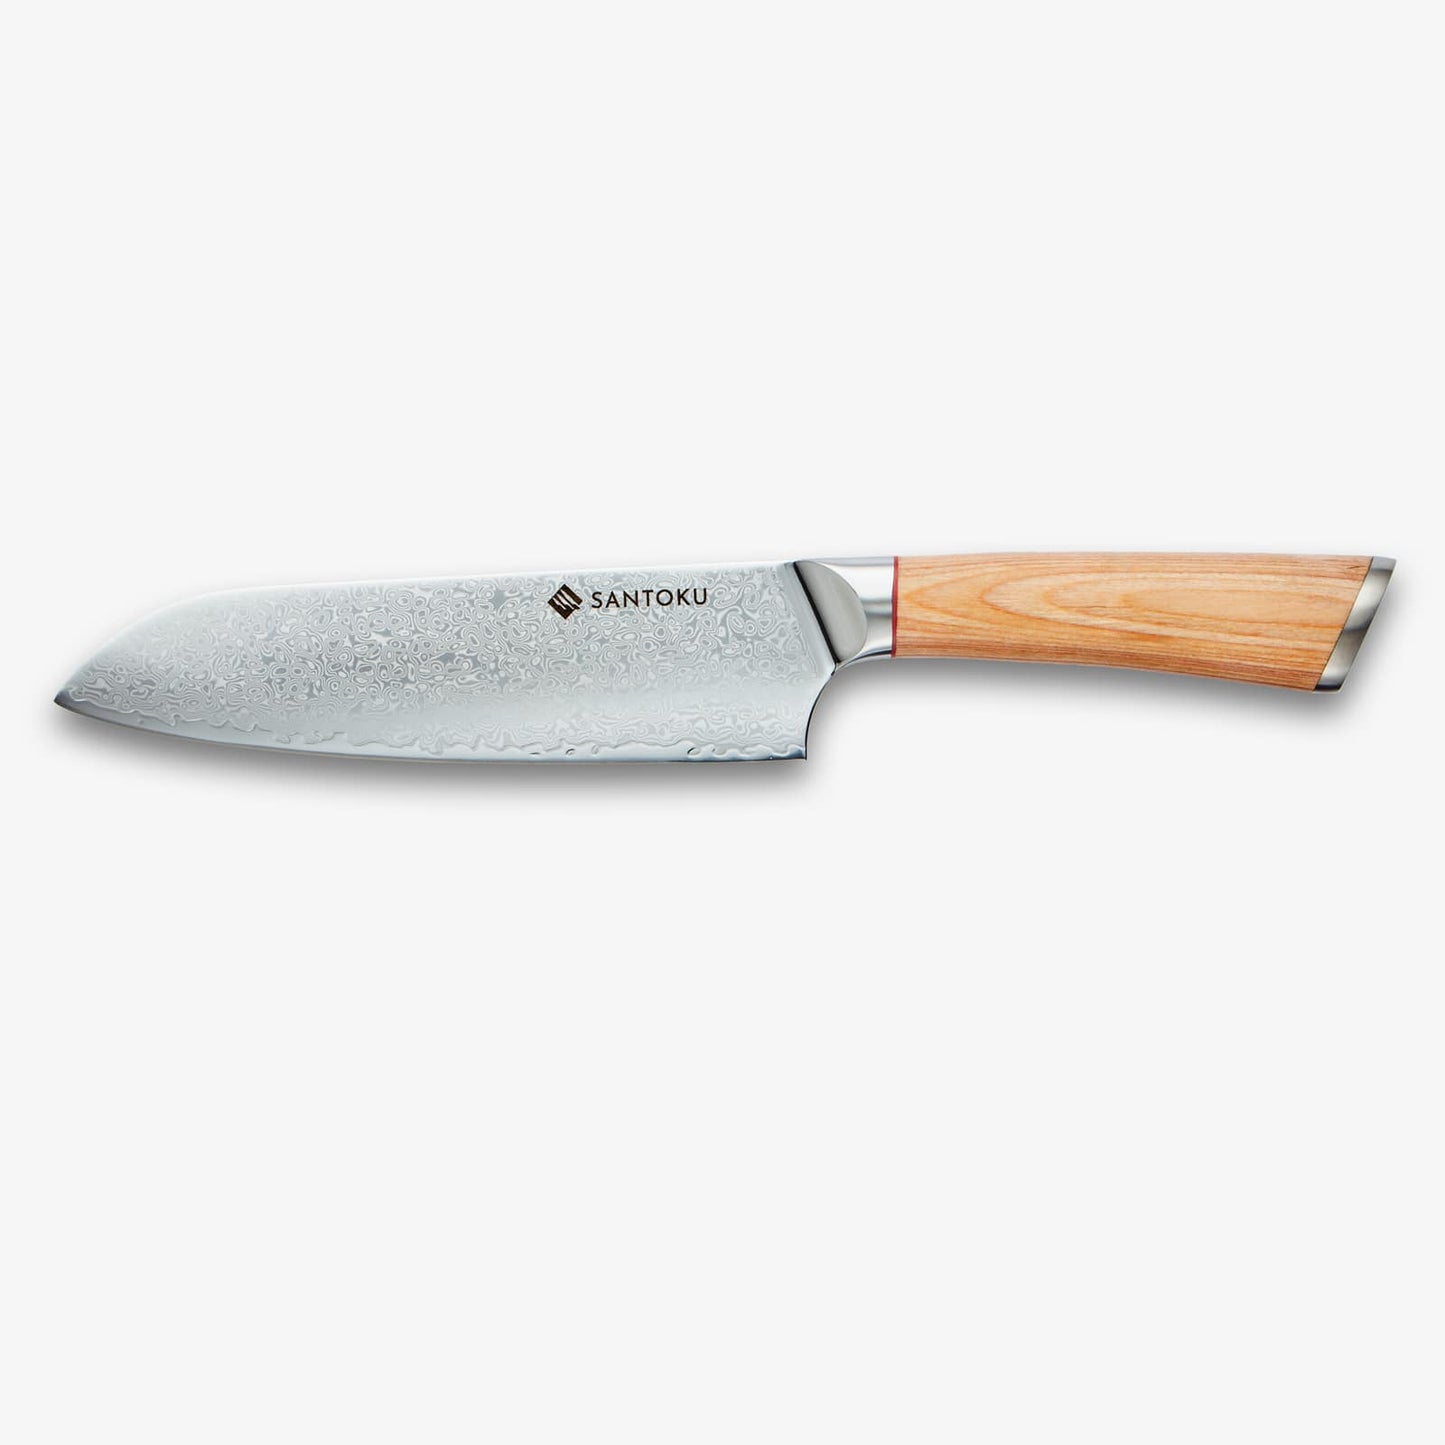 Haruta (はるた)  67 layer AUS 10 Damascus Steel kitchen Knives